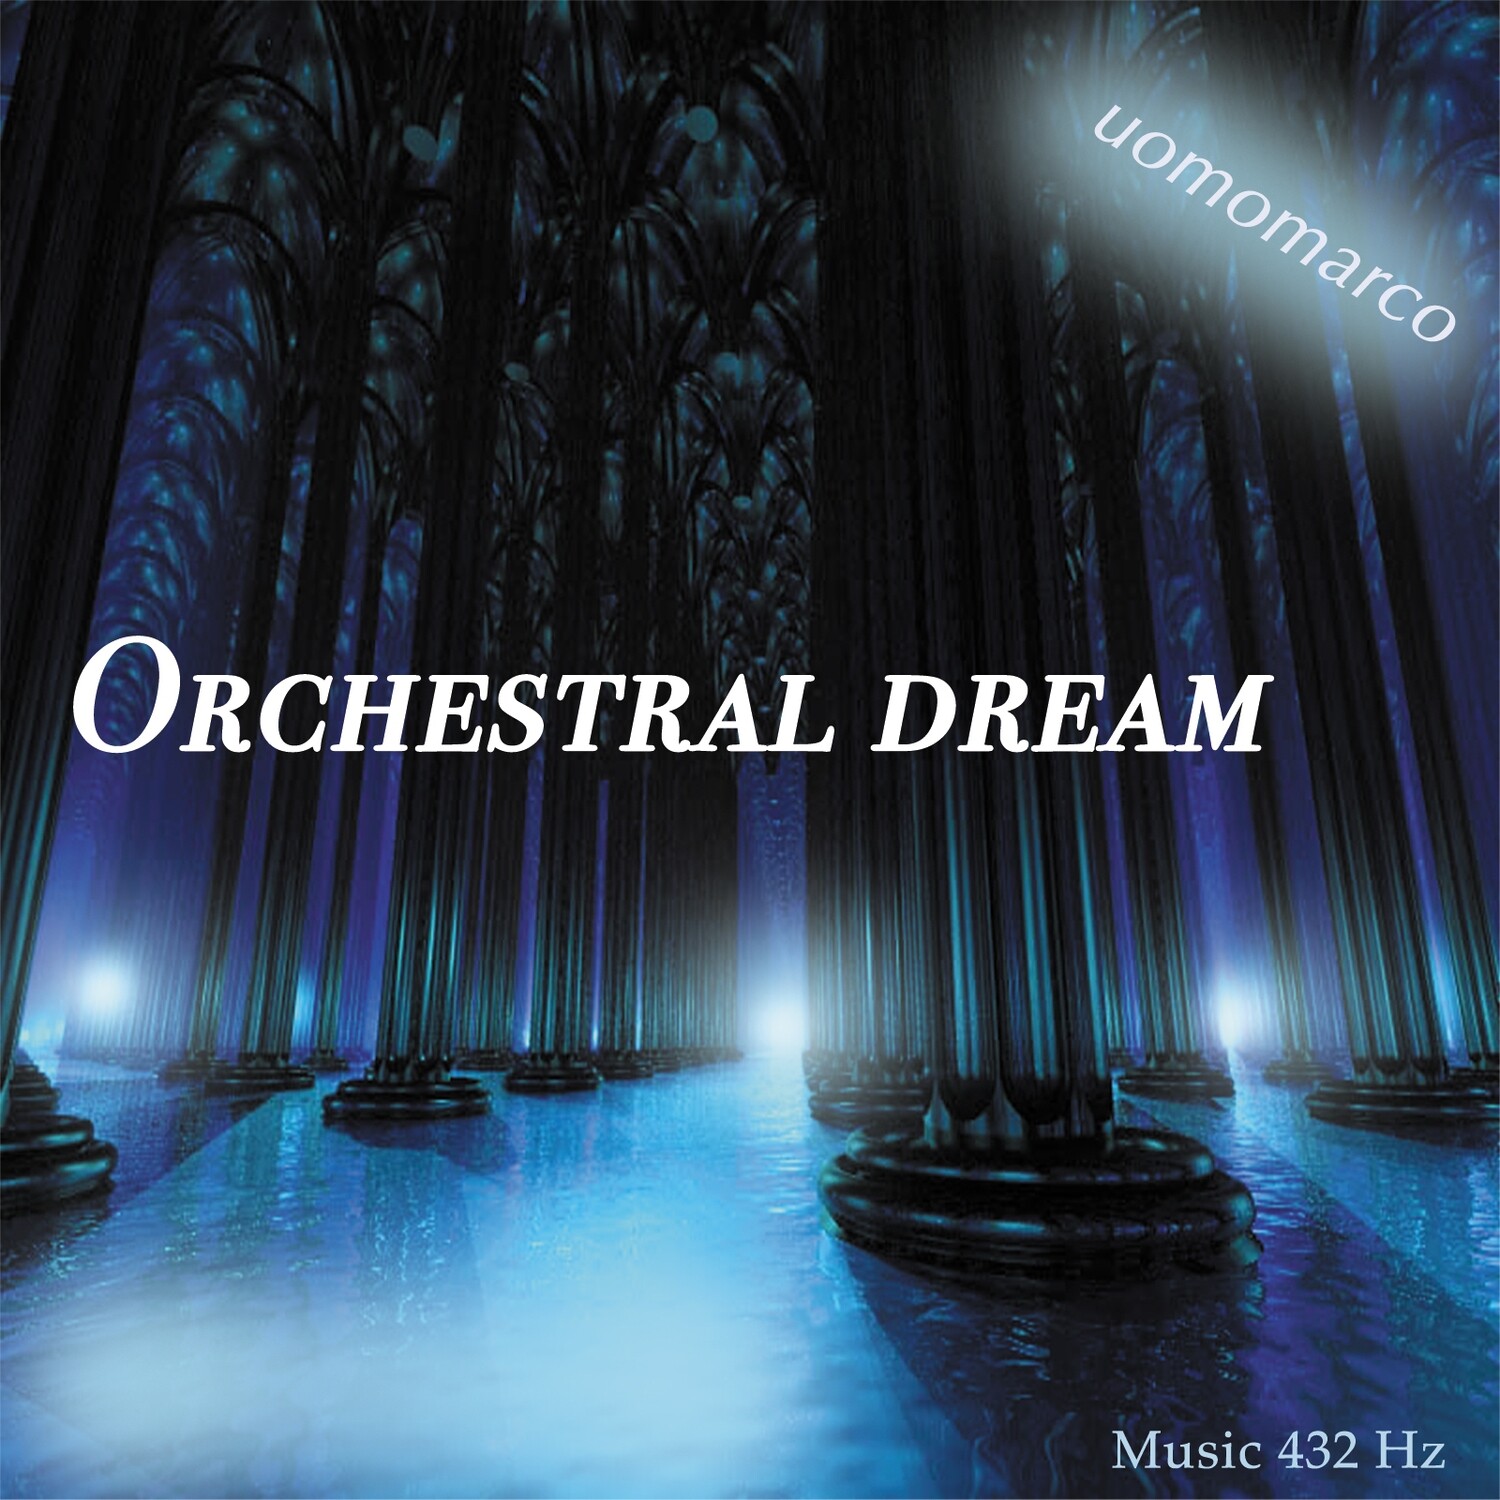 Orchestral dream